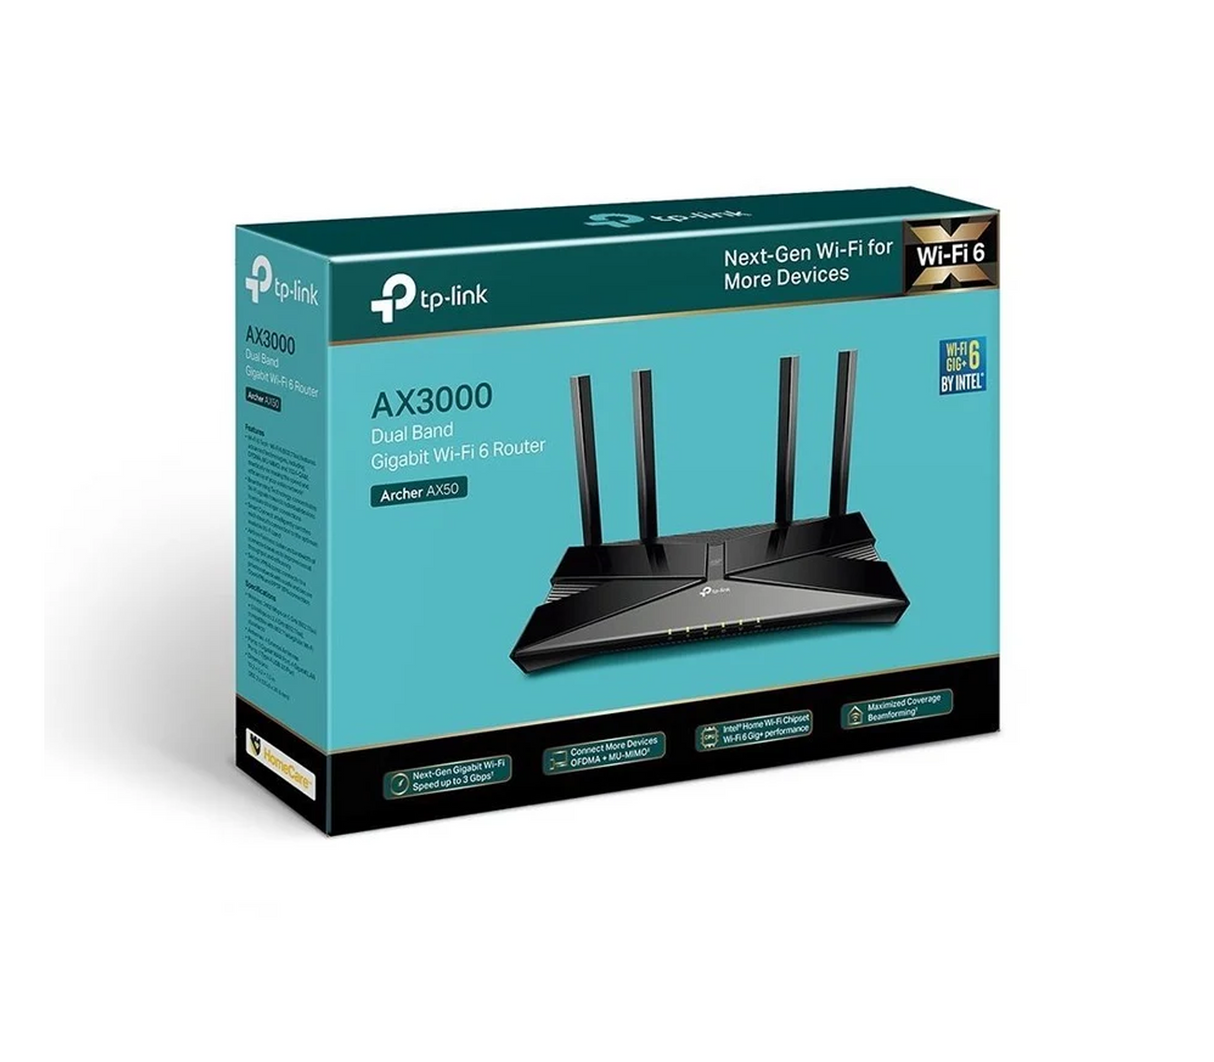 Router wifi Ax50 acher archer AX3000 Tp-link